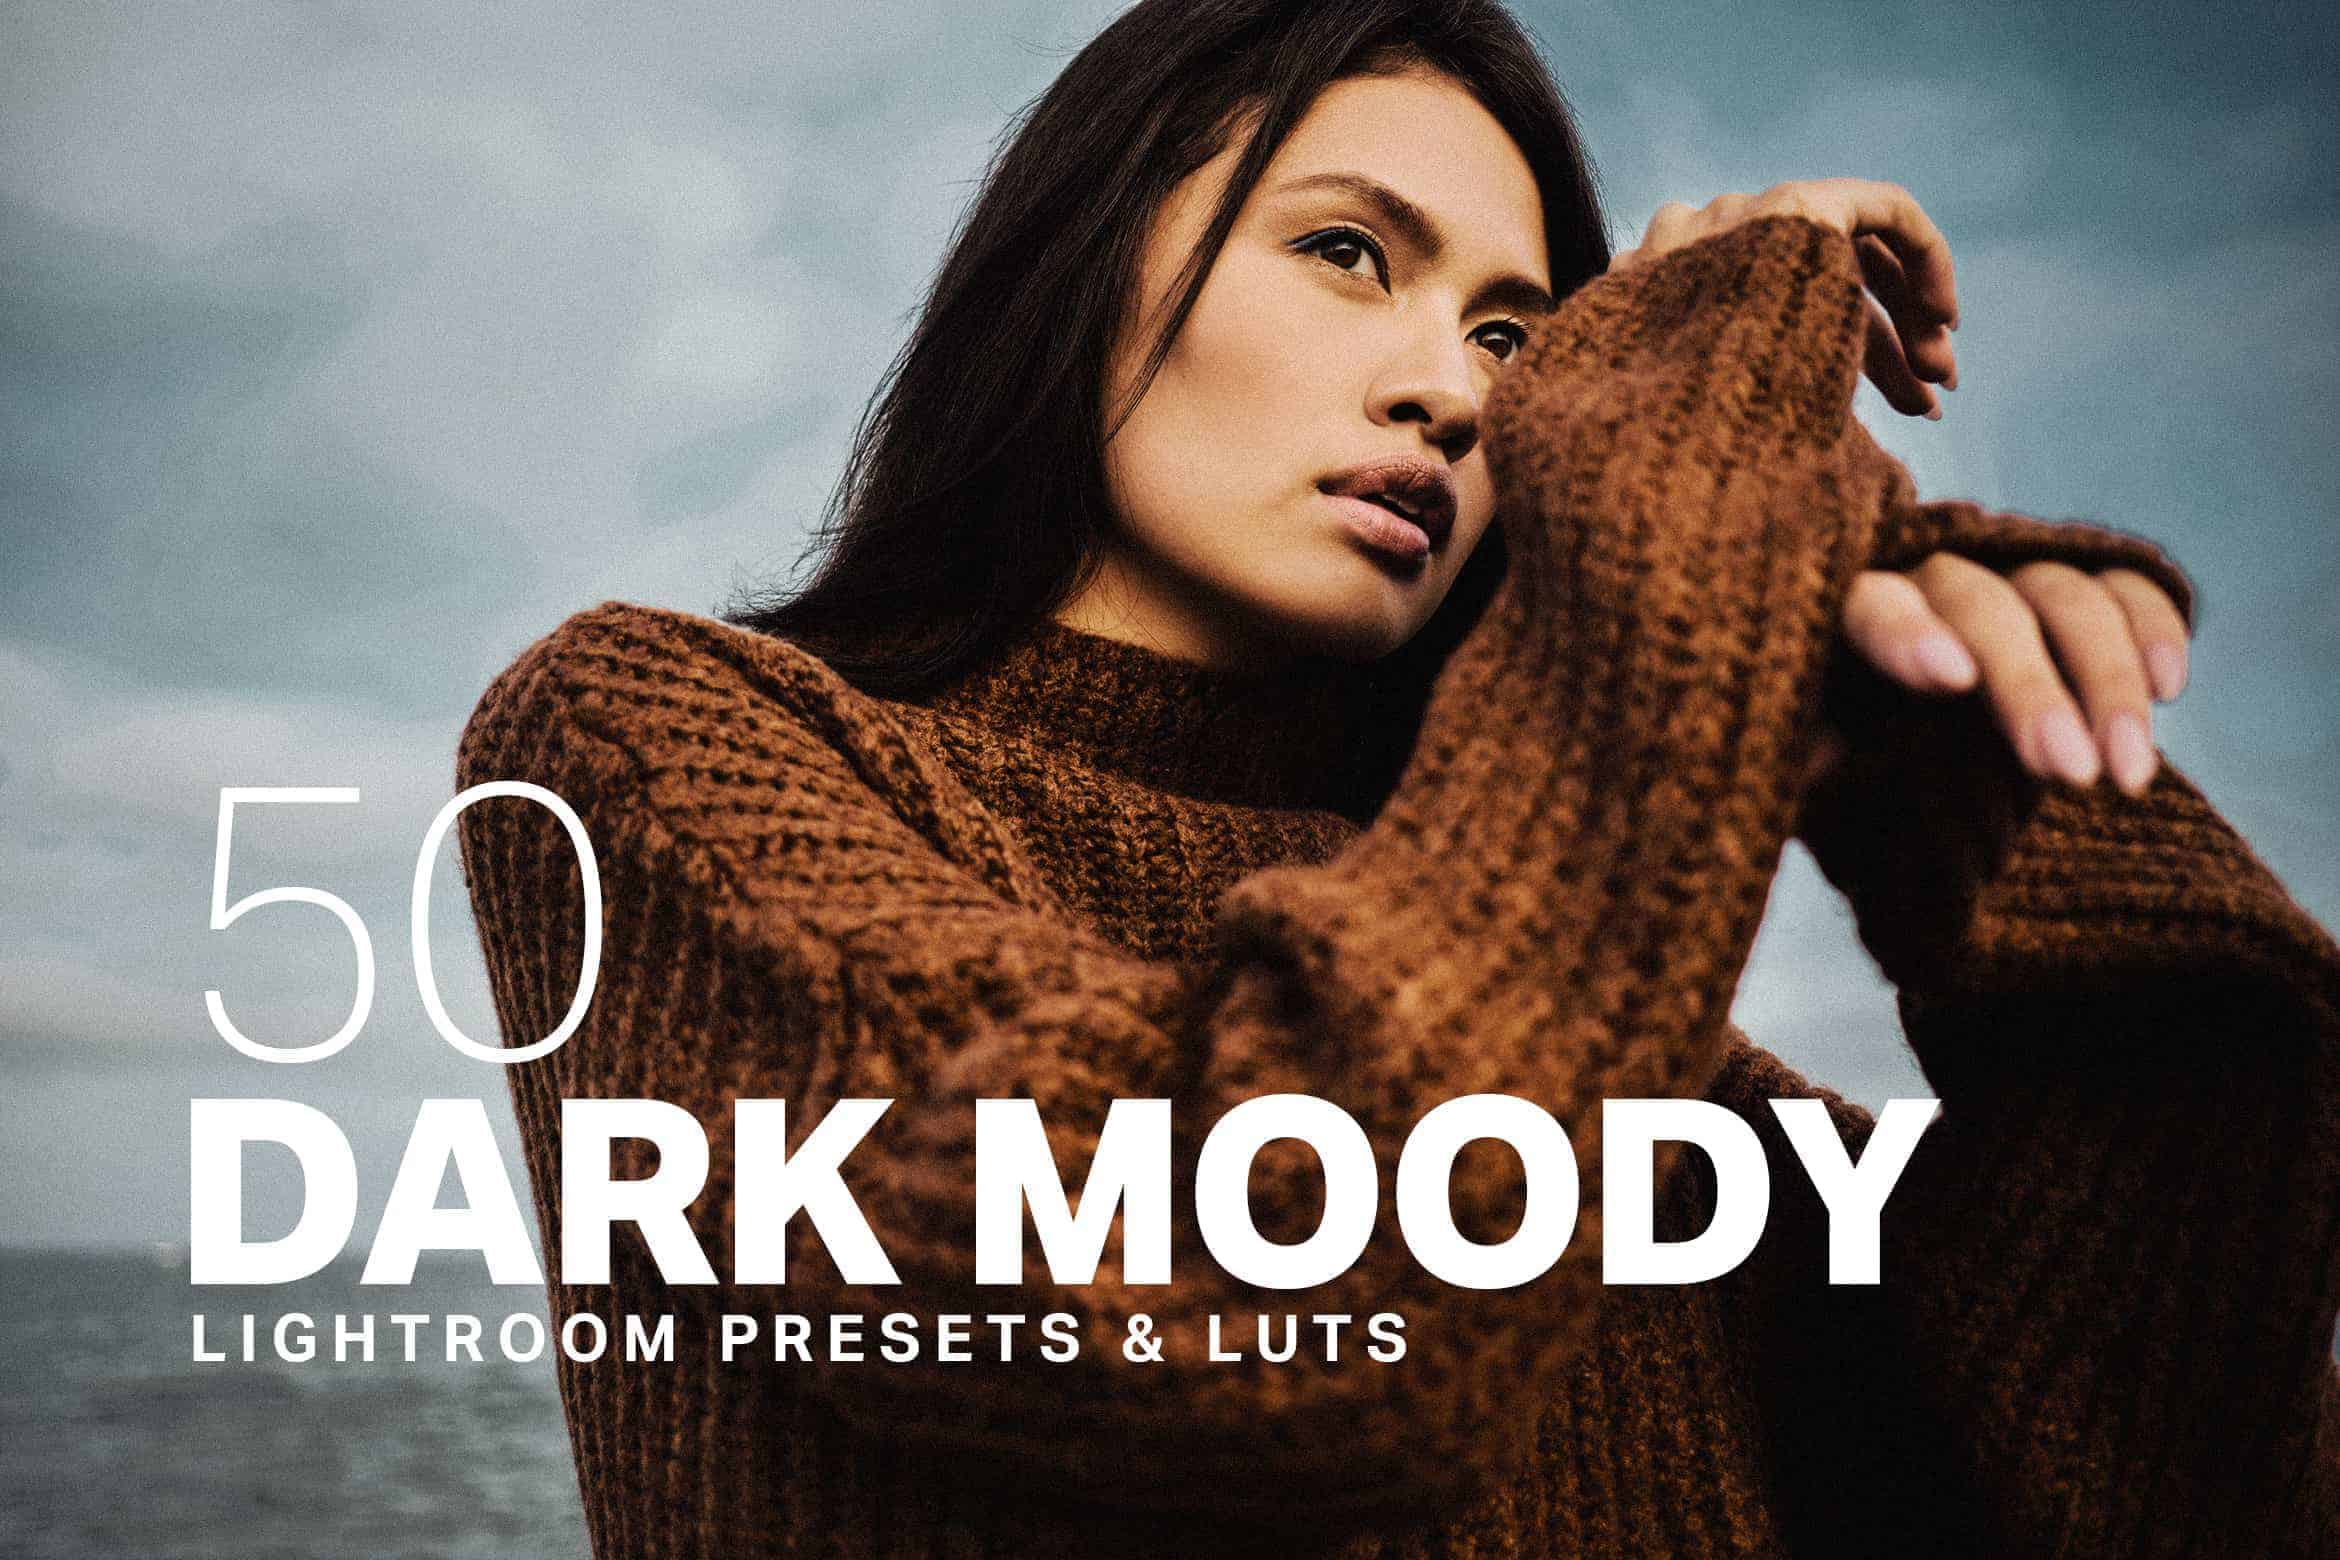 10 Dark and Moody Lightroom Presets